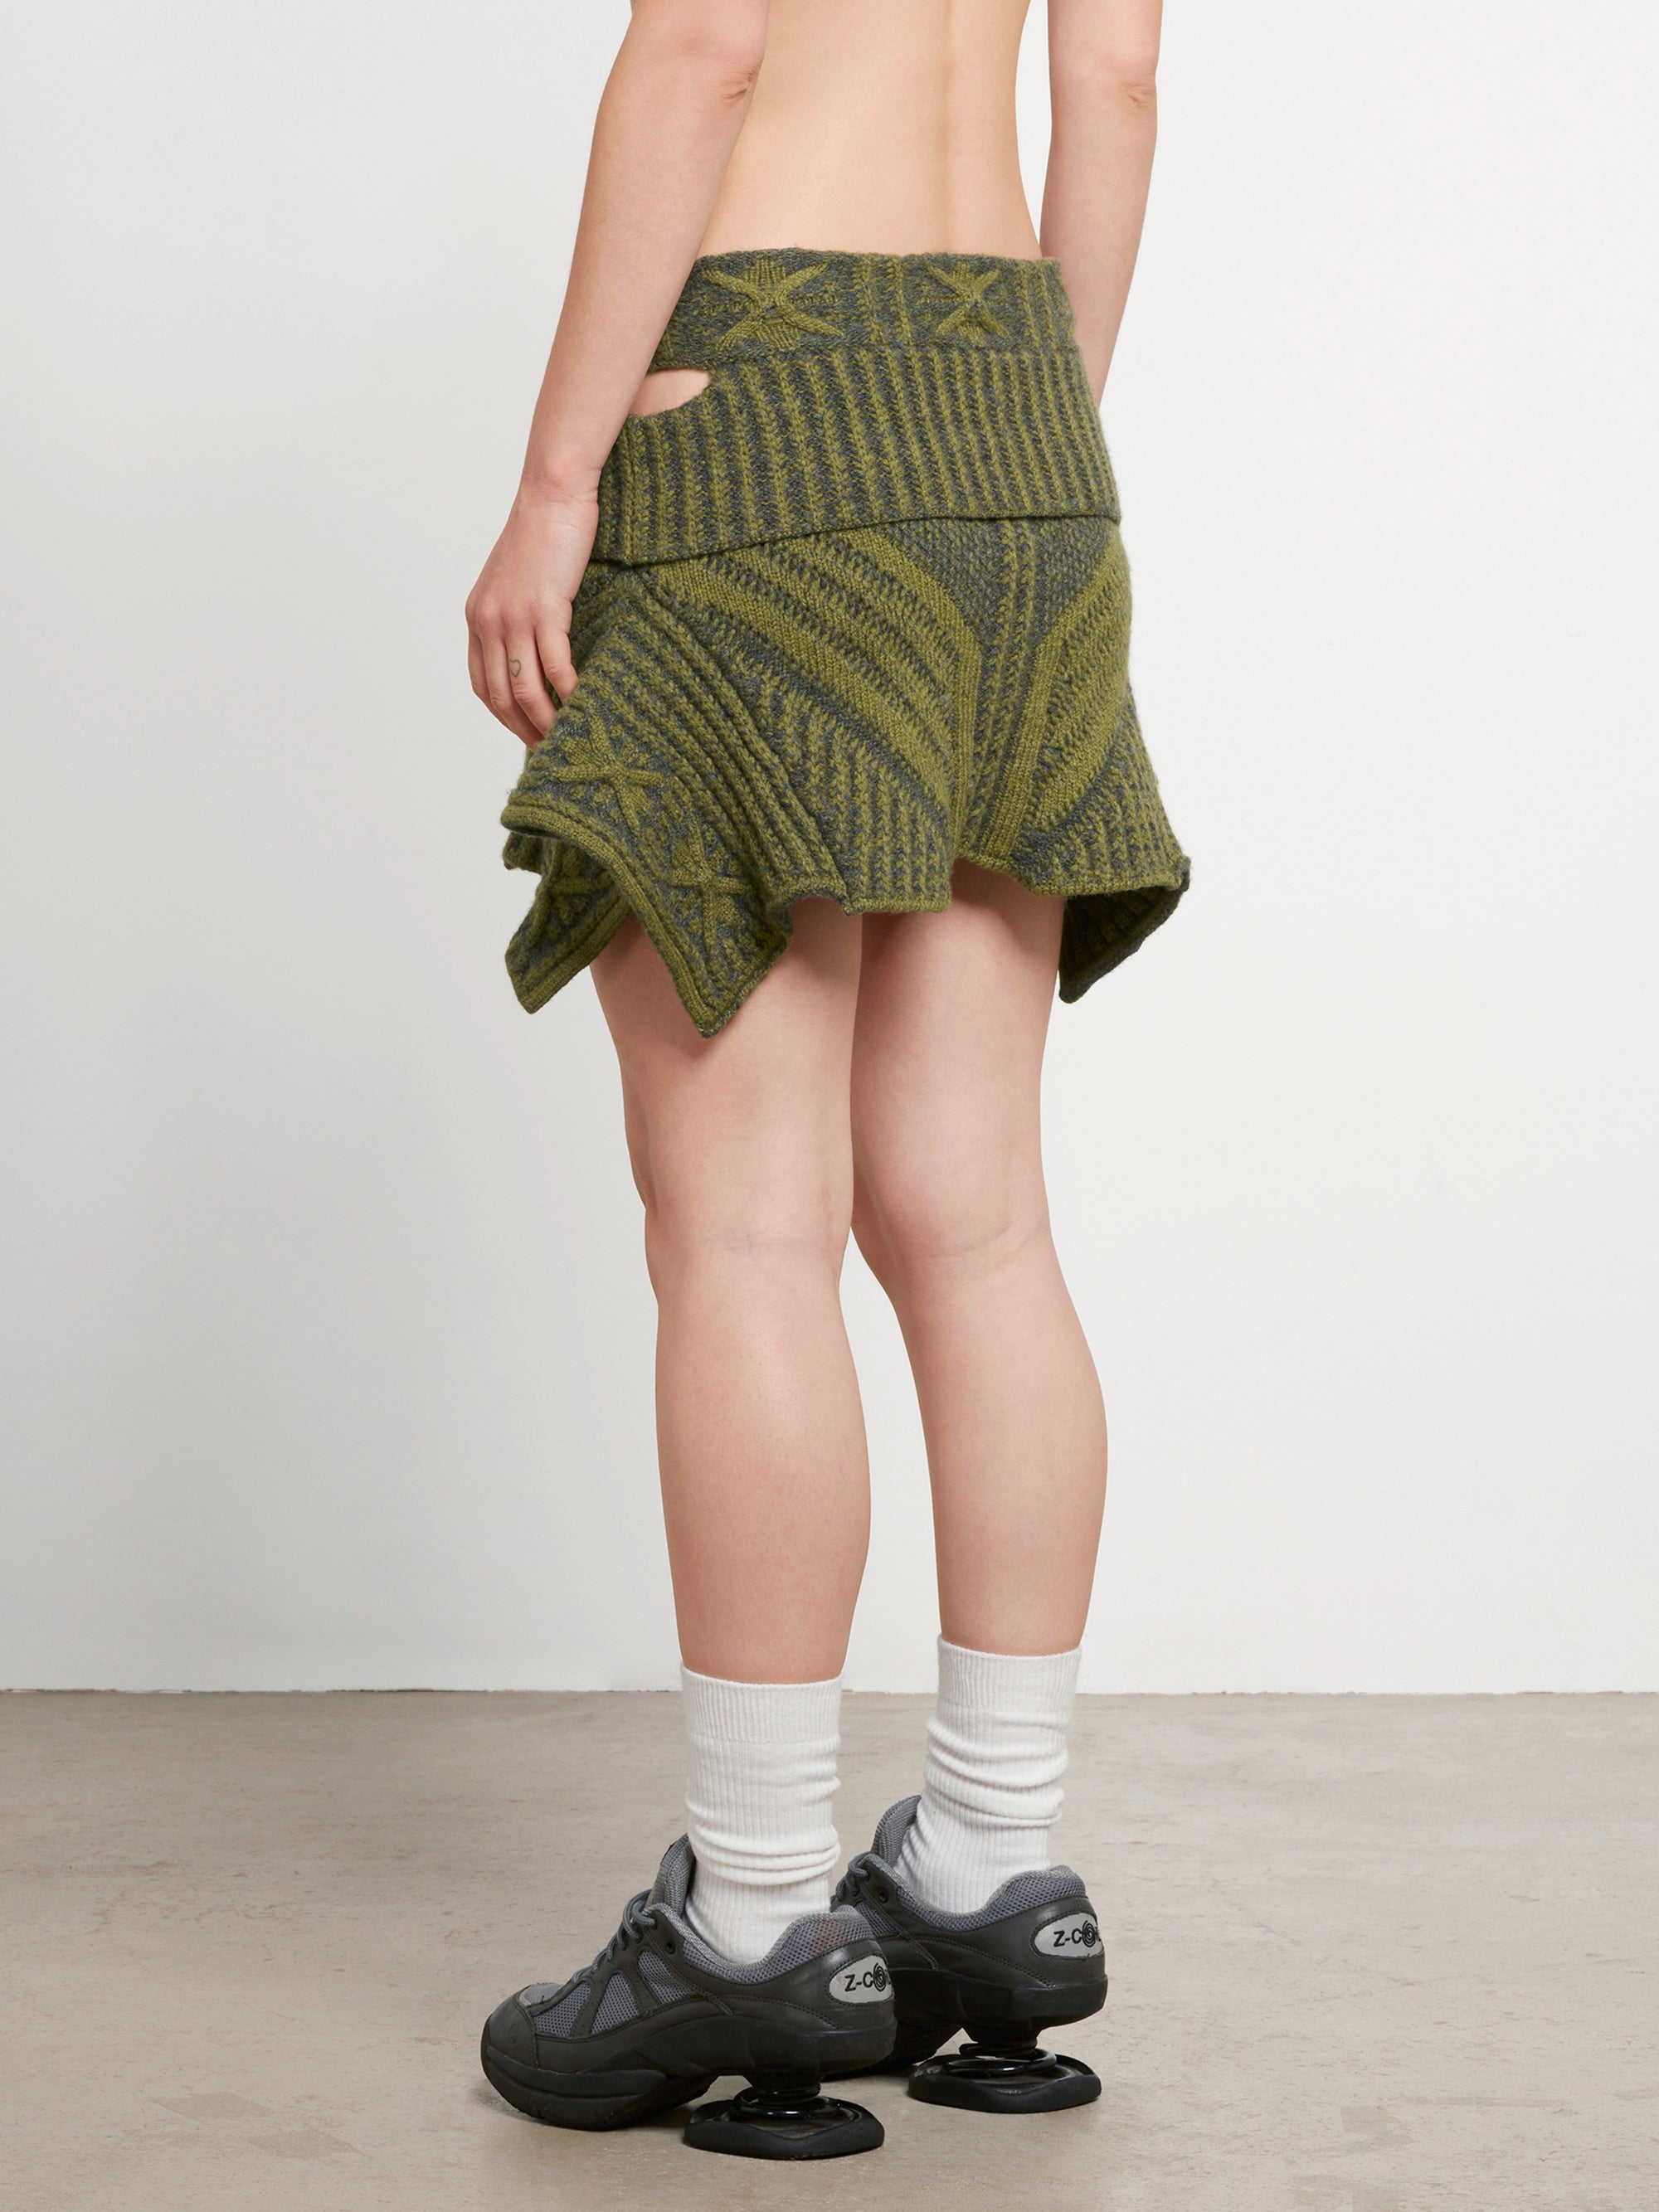 Paolina Russo - Women’s Warrior Mini Skirt - (Khaki) view 3